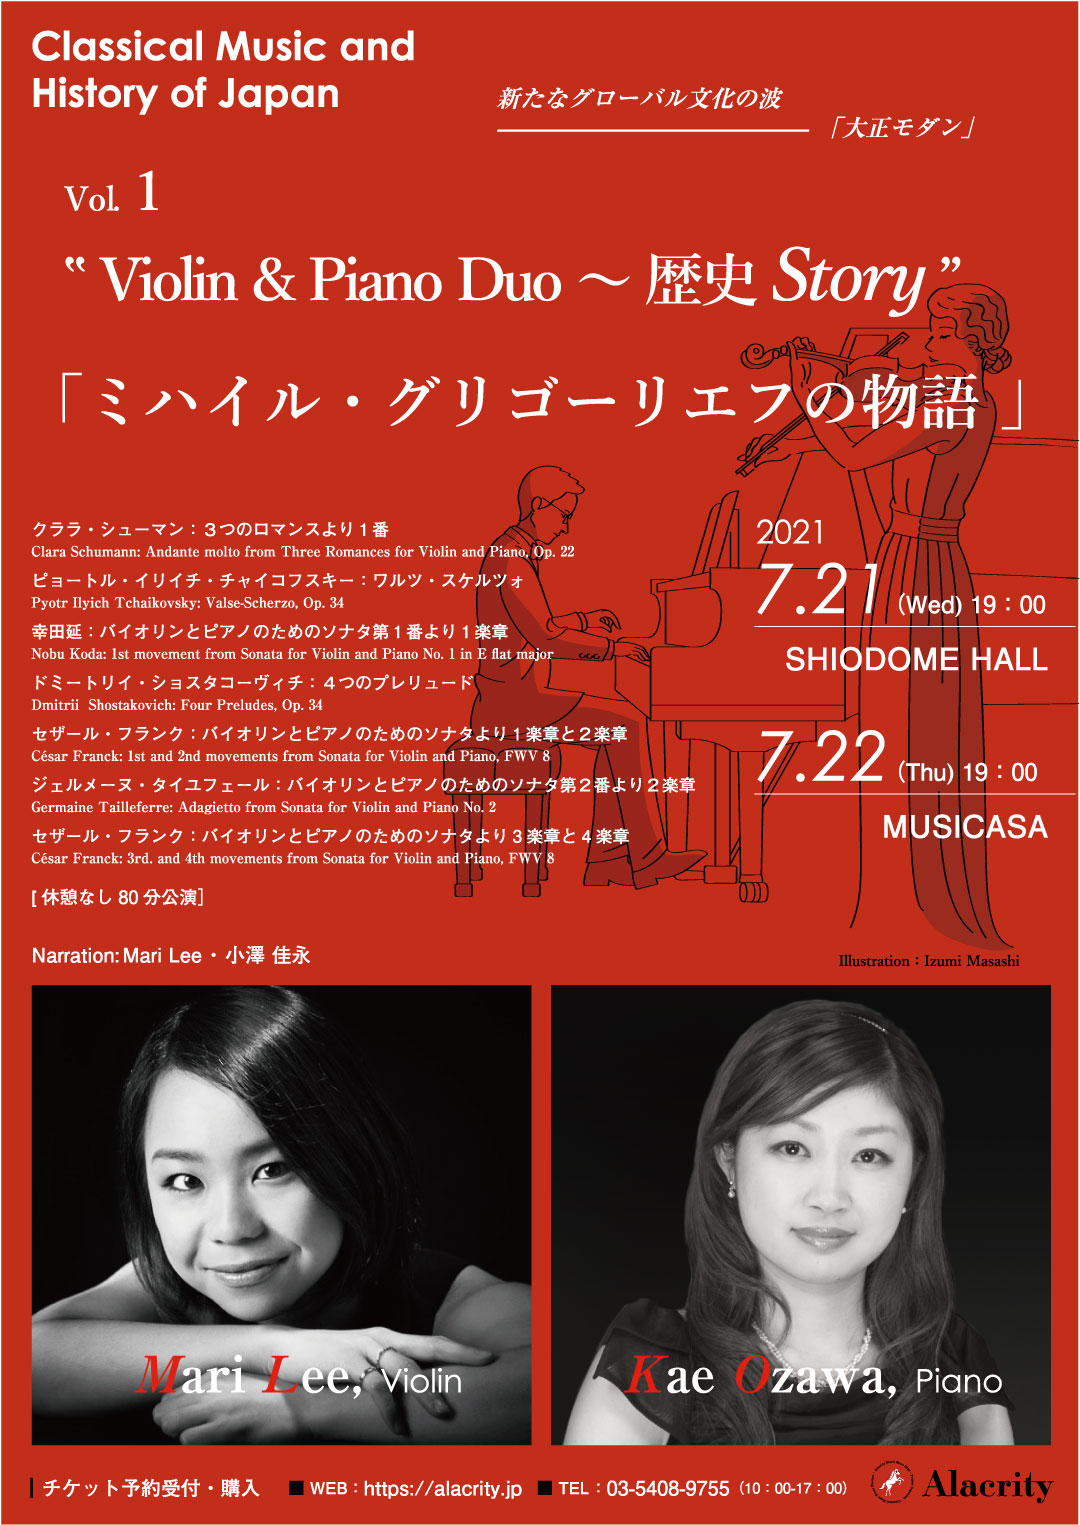 Vol. 1　‟ Violin & Piano Duo ～ 歴史 Story ” 「ミハイル・グリゴーリエフの物語 」